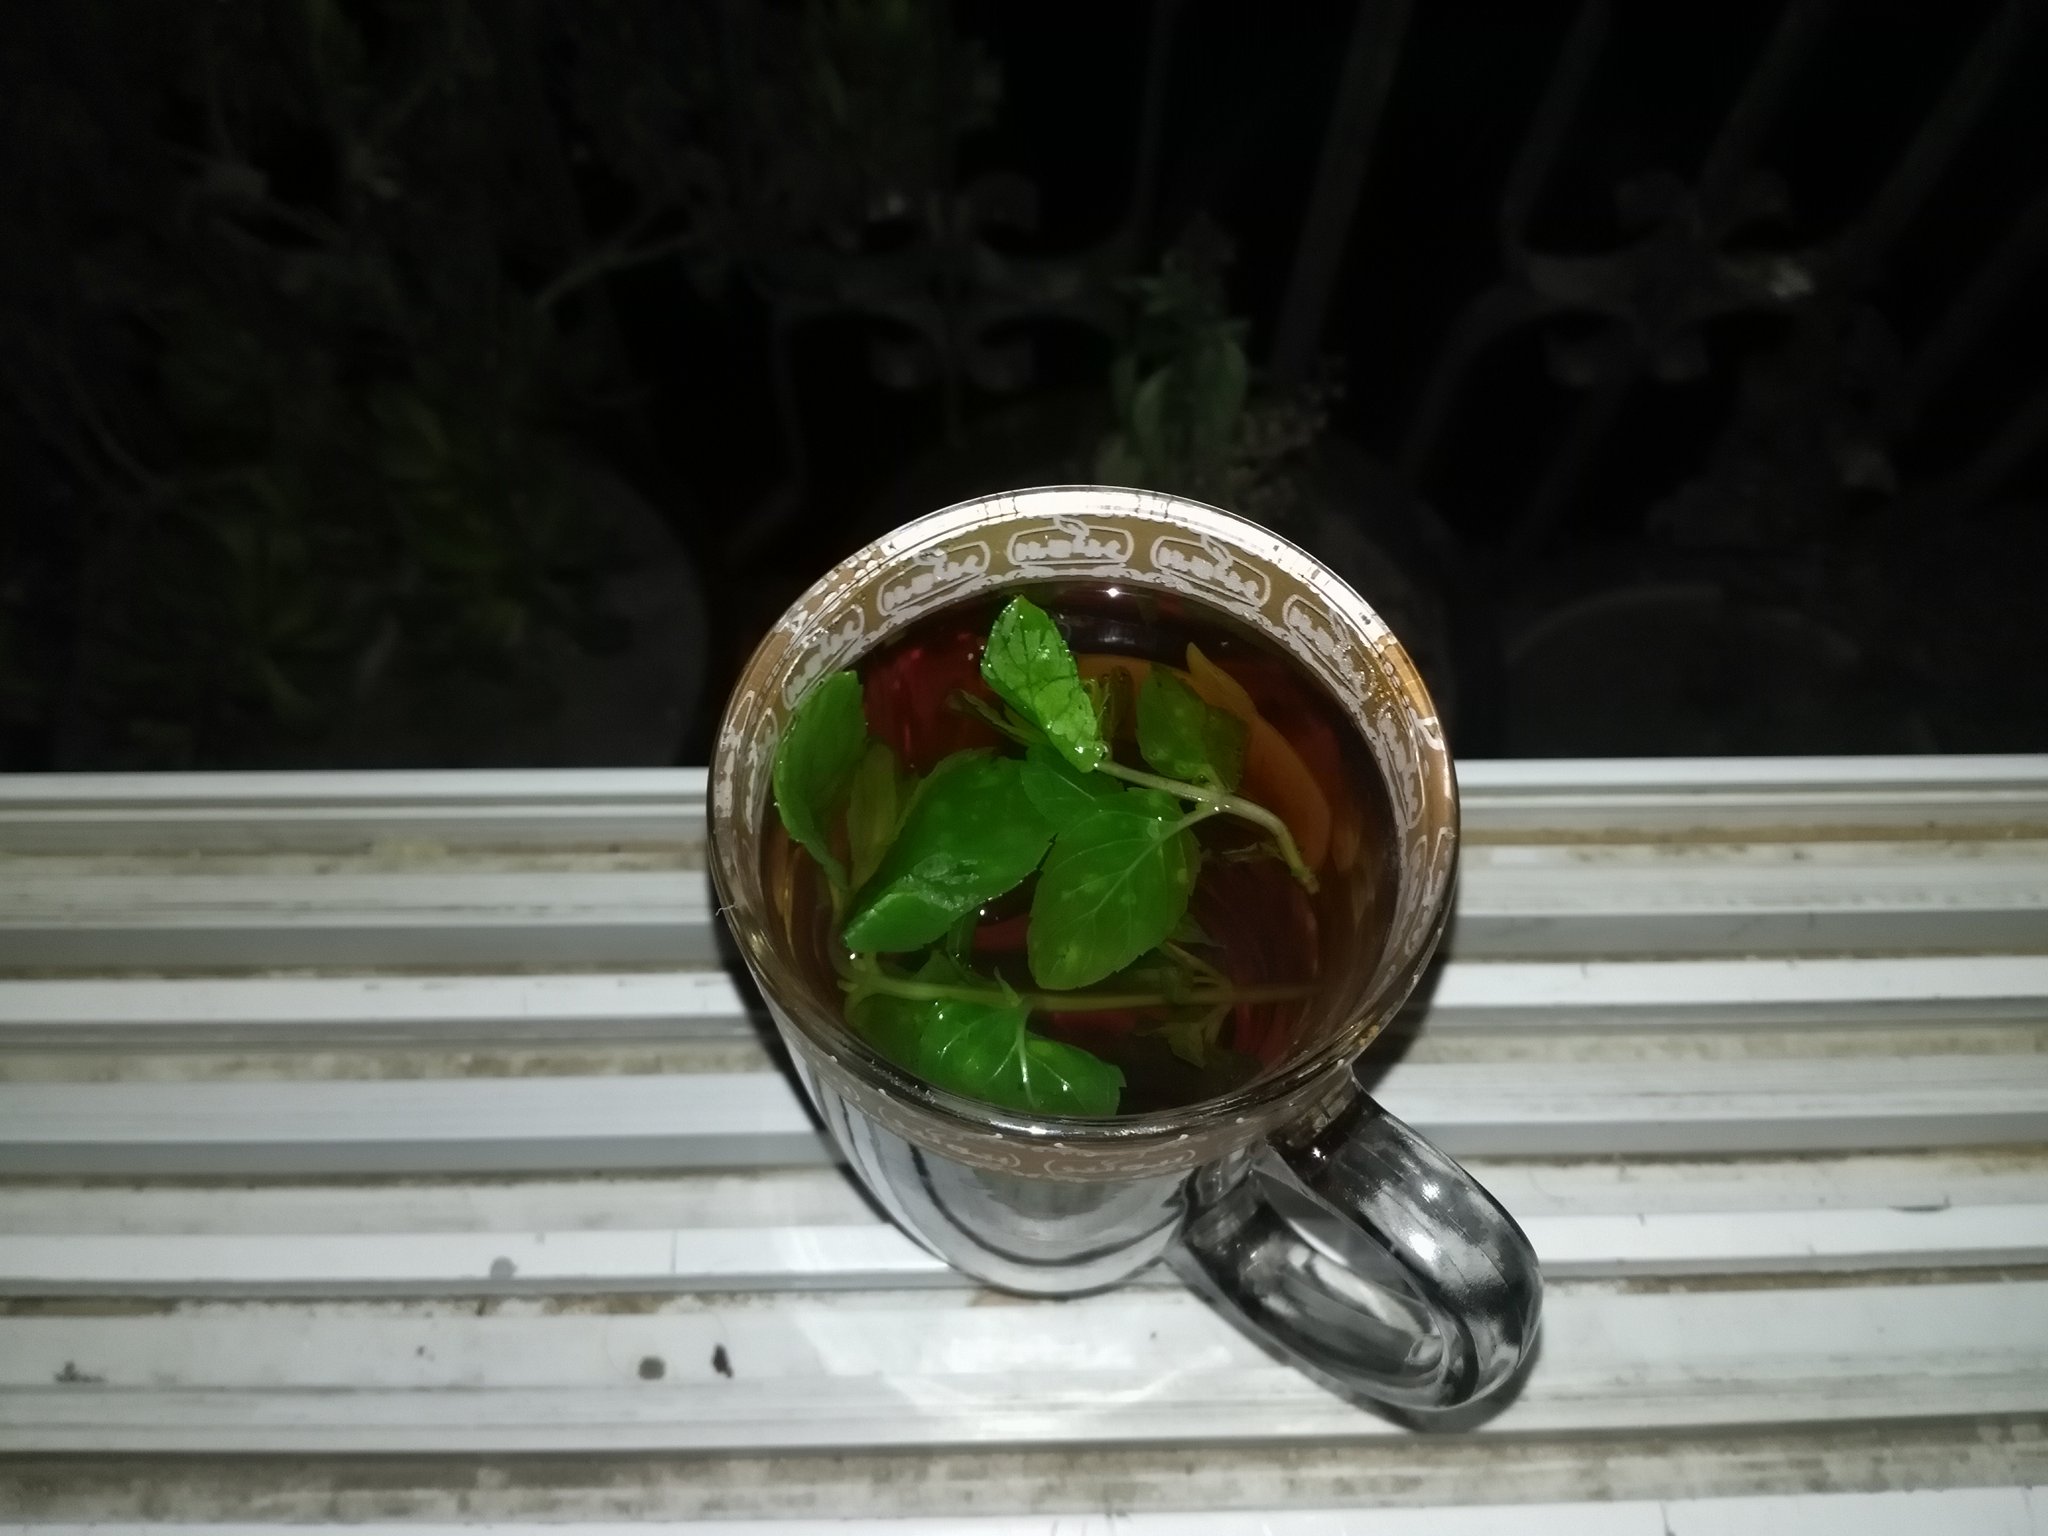 a mug of tea with mint leaves